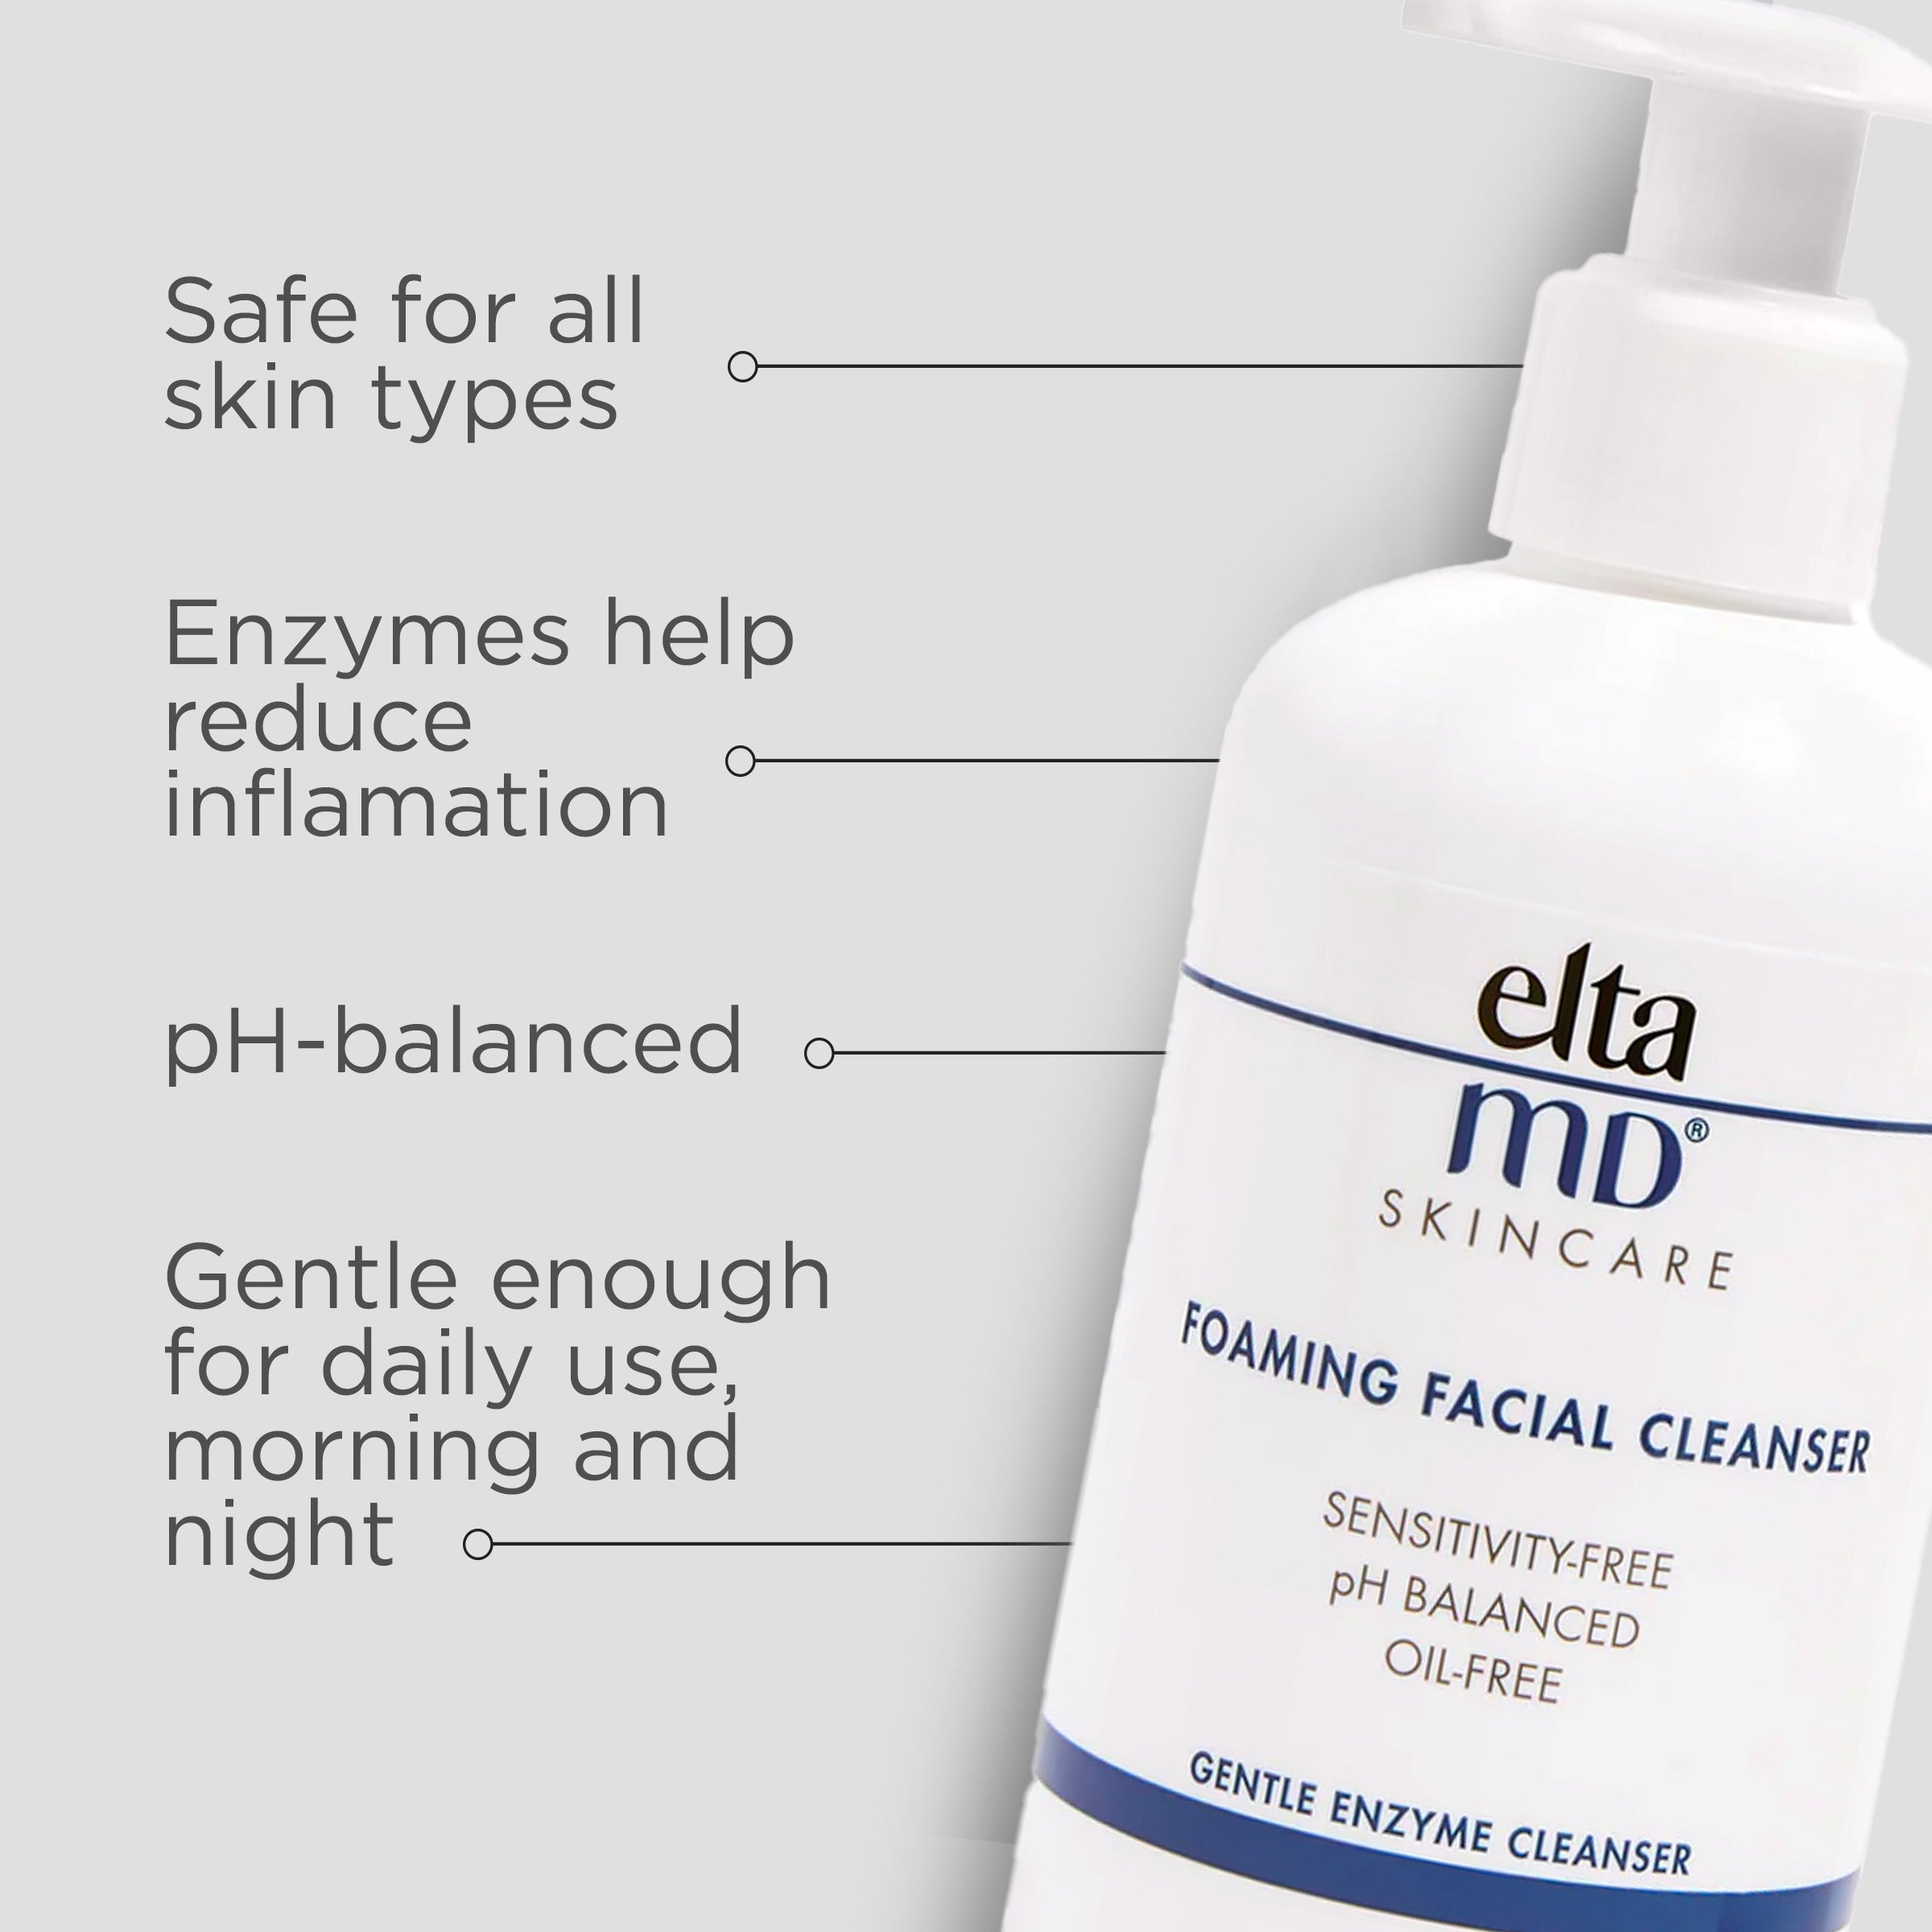 EltaMD Foaming Facial Cleanser (2.7 oz)